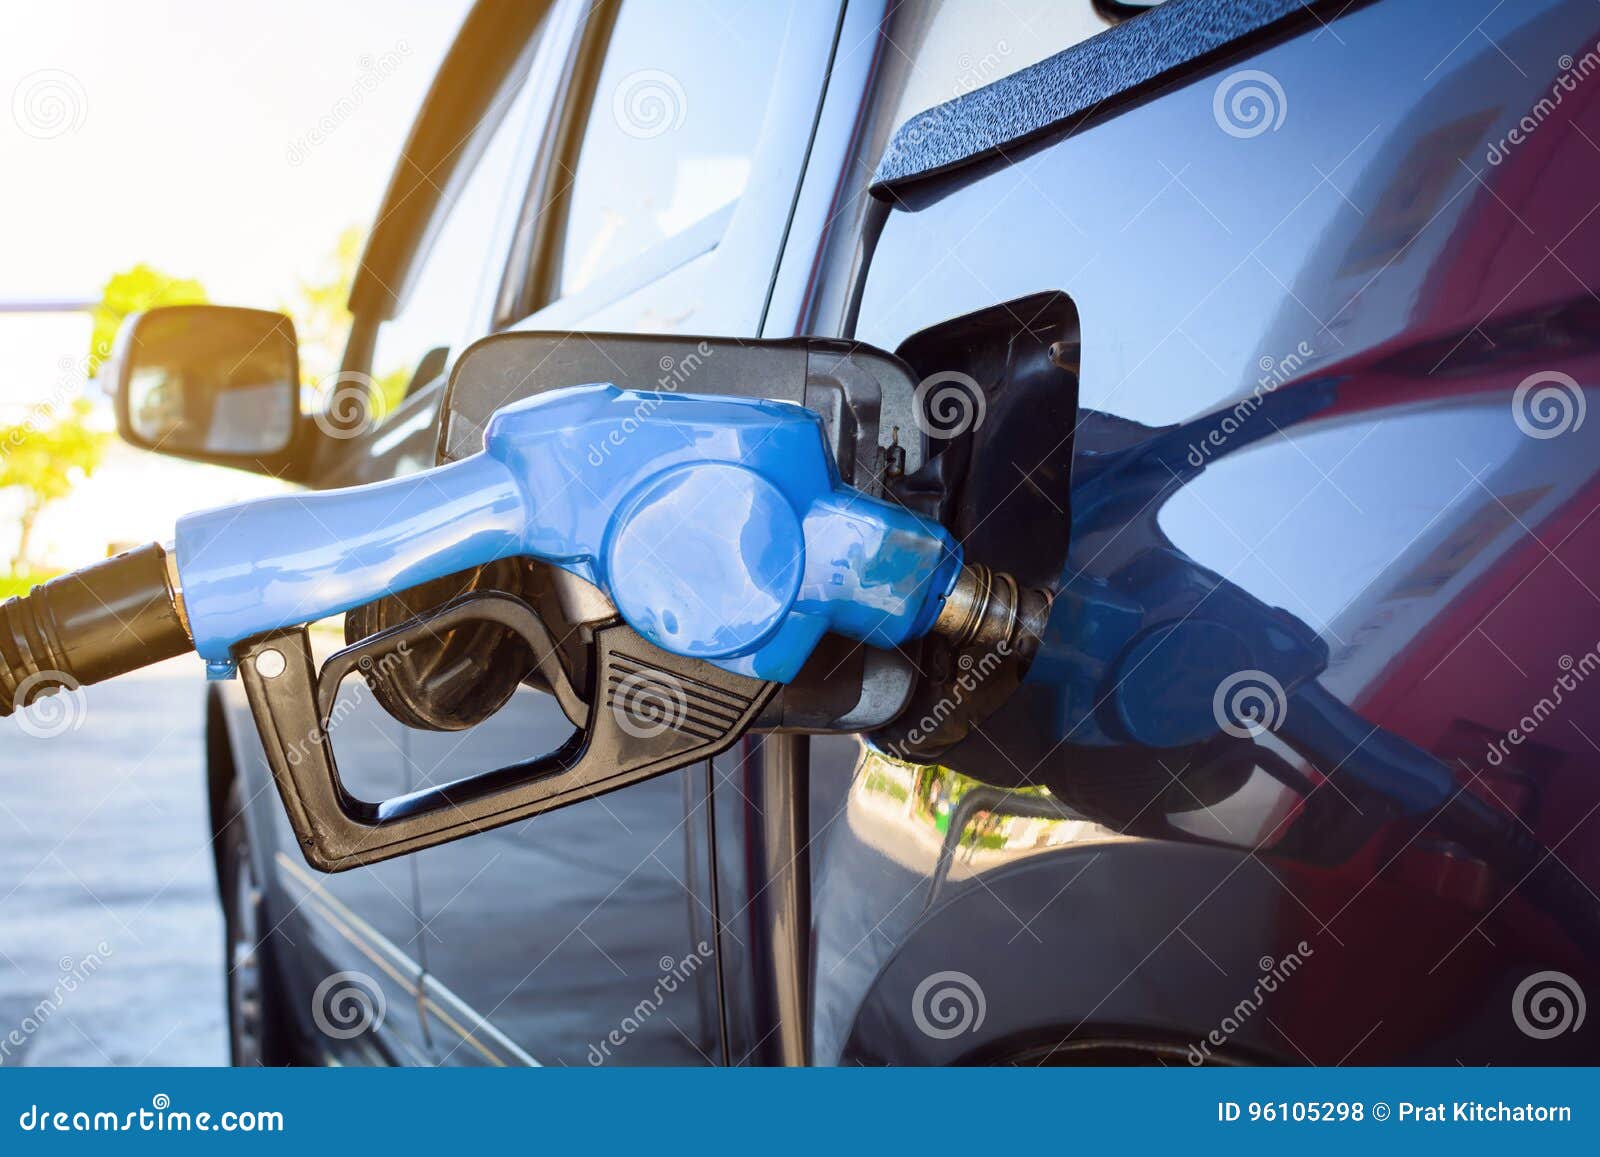 refuel car at petrol pump